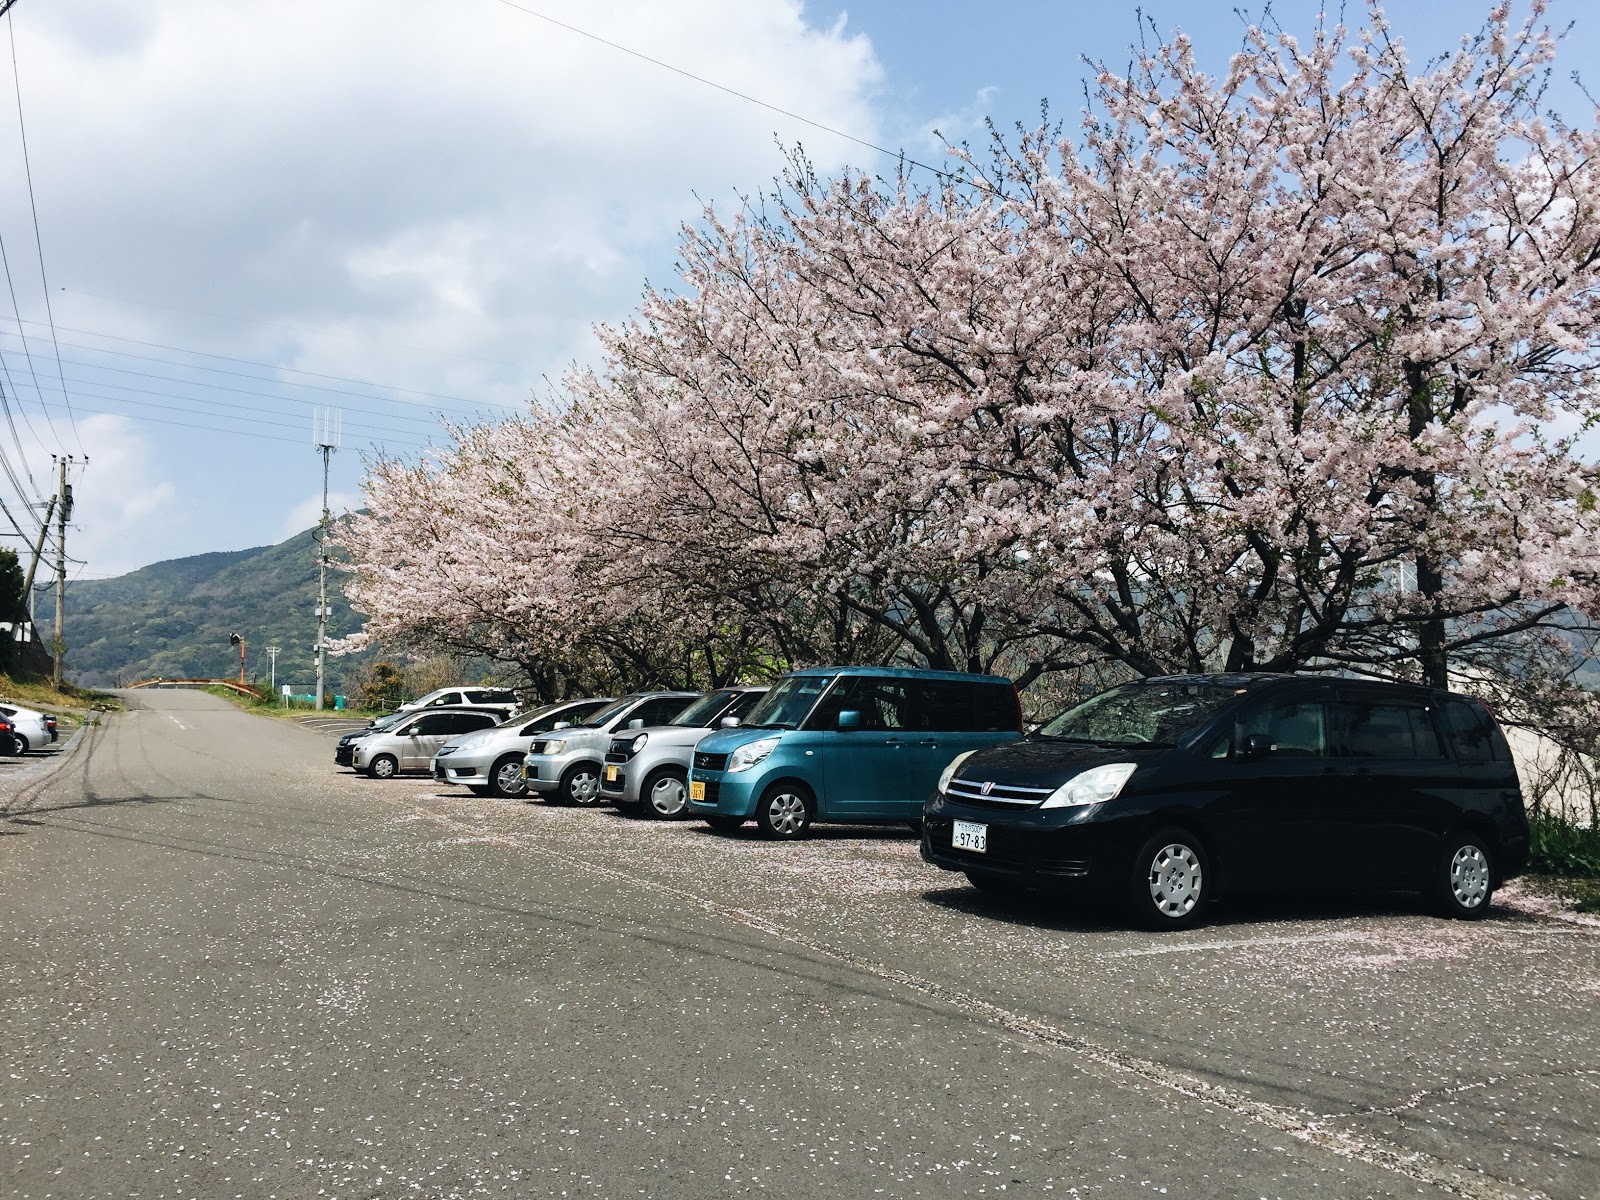 Sakura 2017: Here and There in Sasebo – Eustea Reads